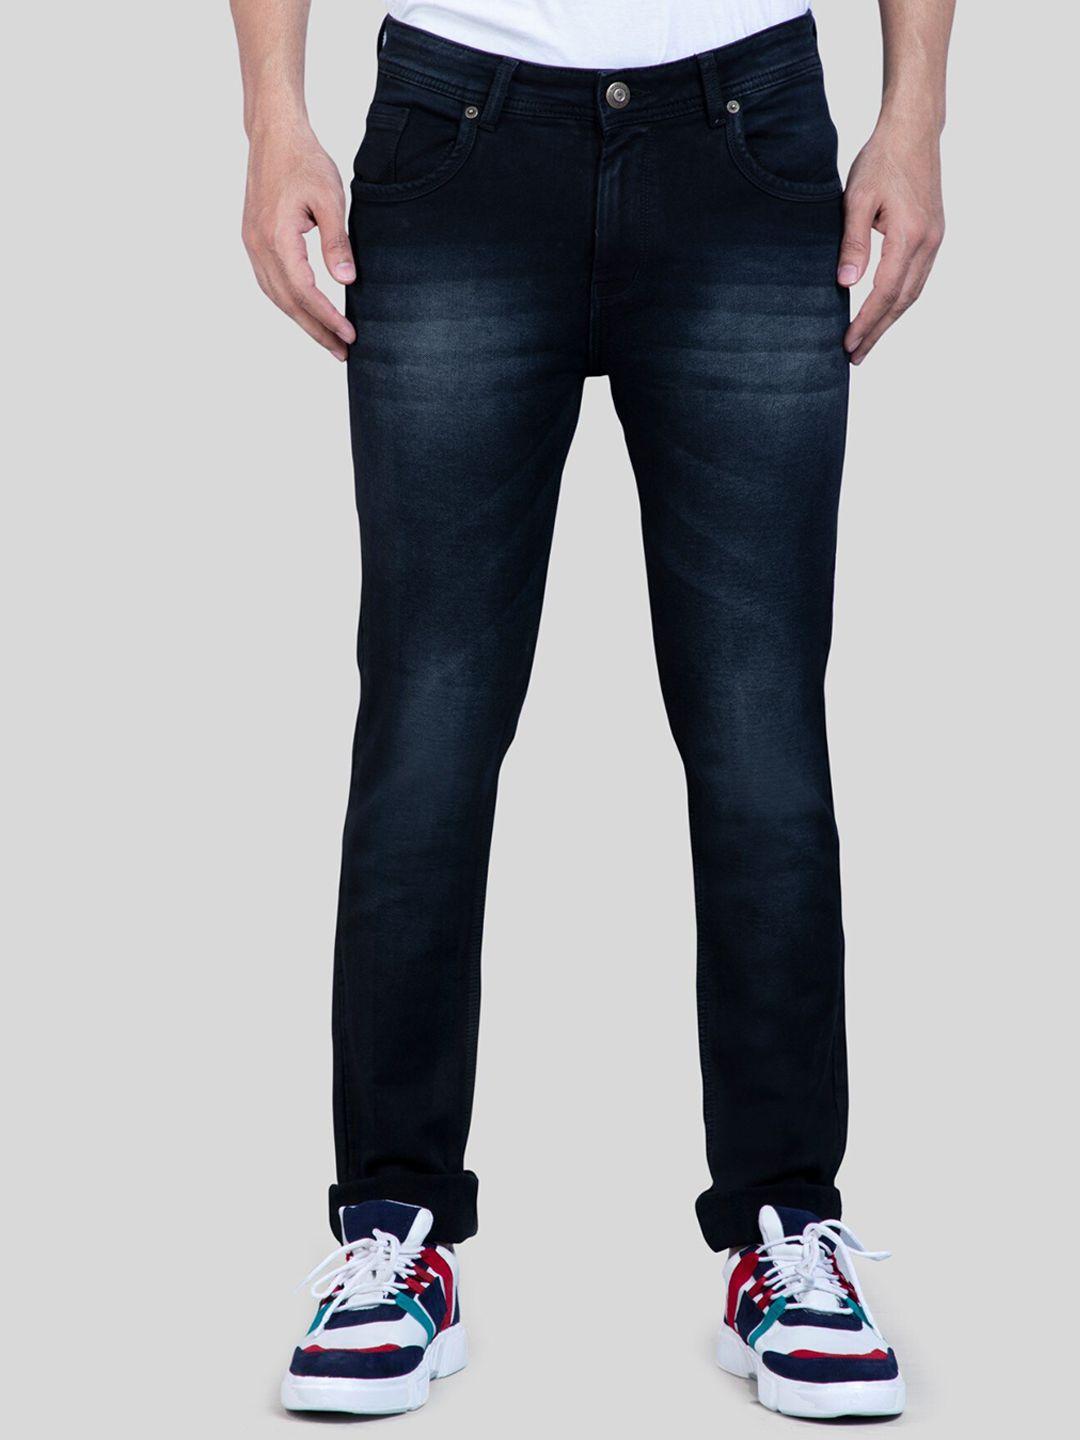 hj-hasasi-men-black-light-fade-stretchable-jeans